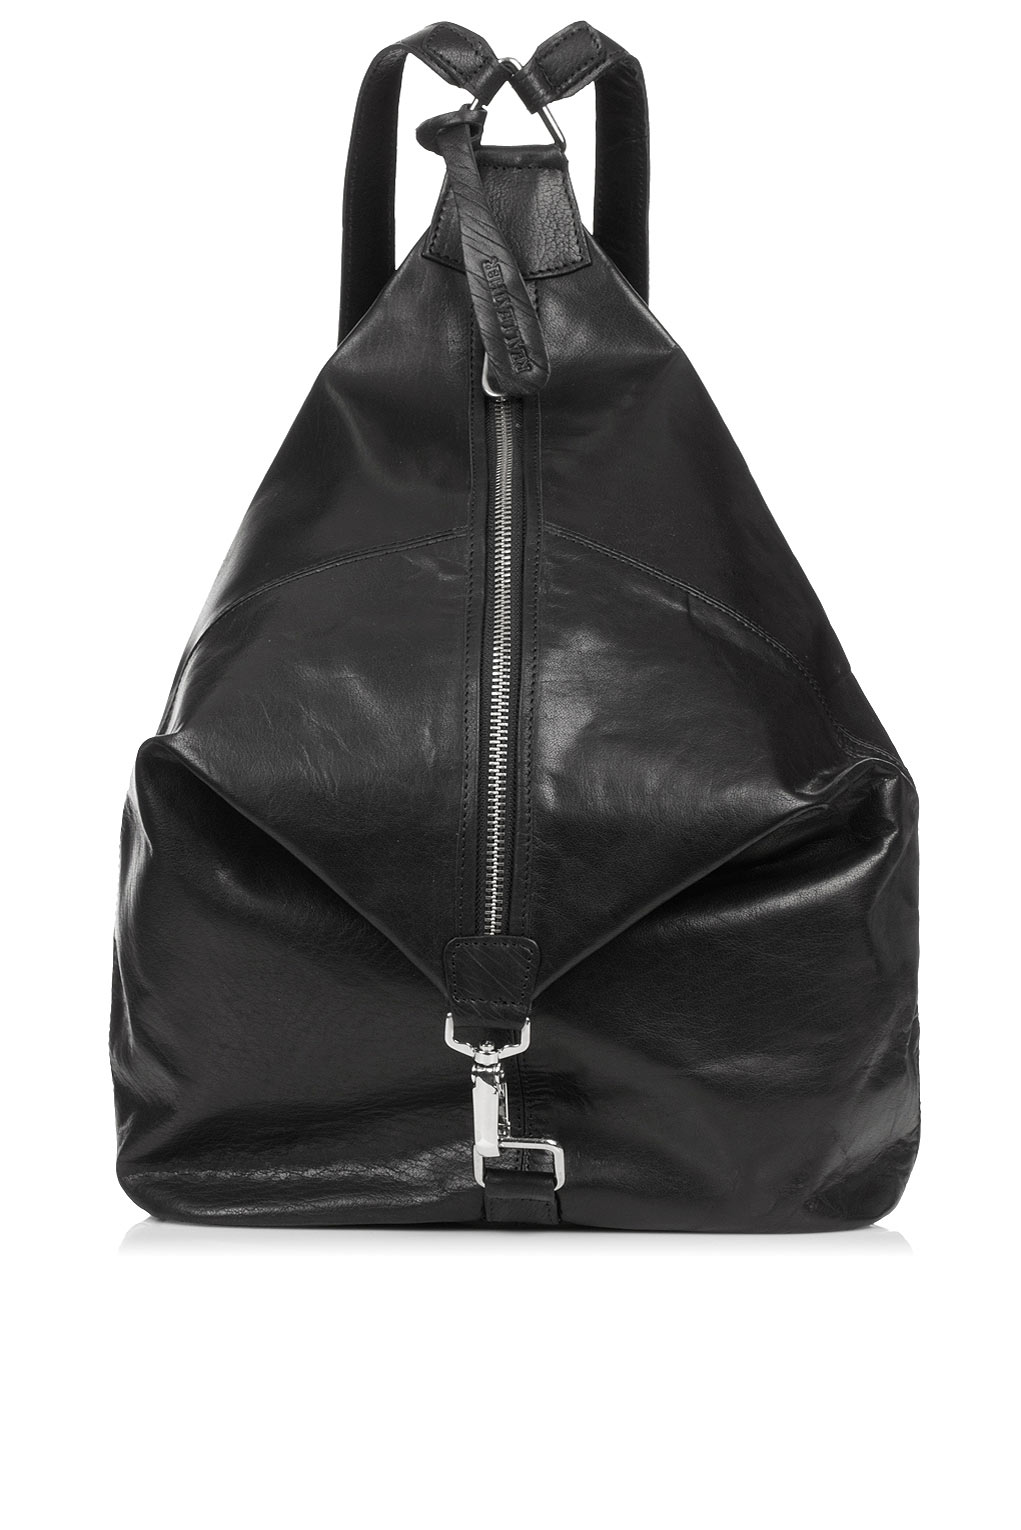 Lyst - Topshop Clean Clip Backpack in Black